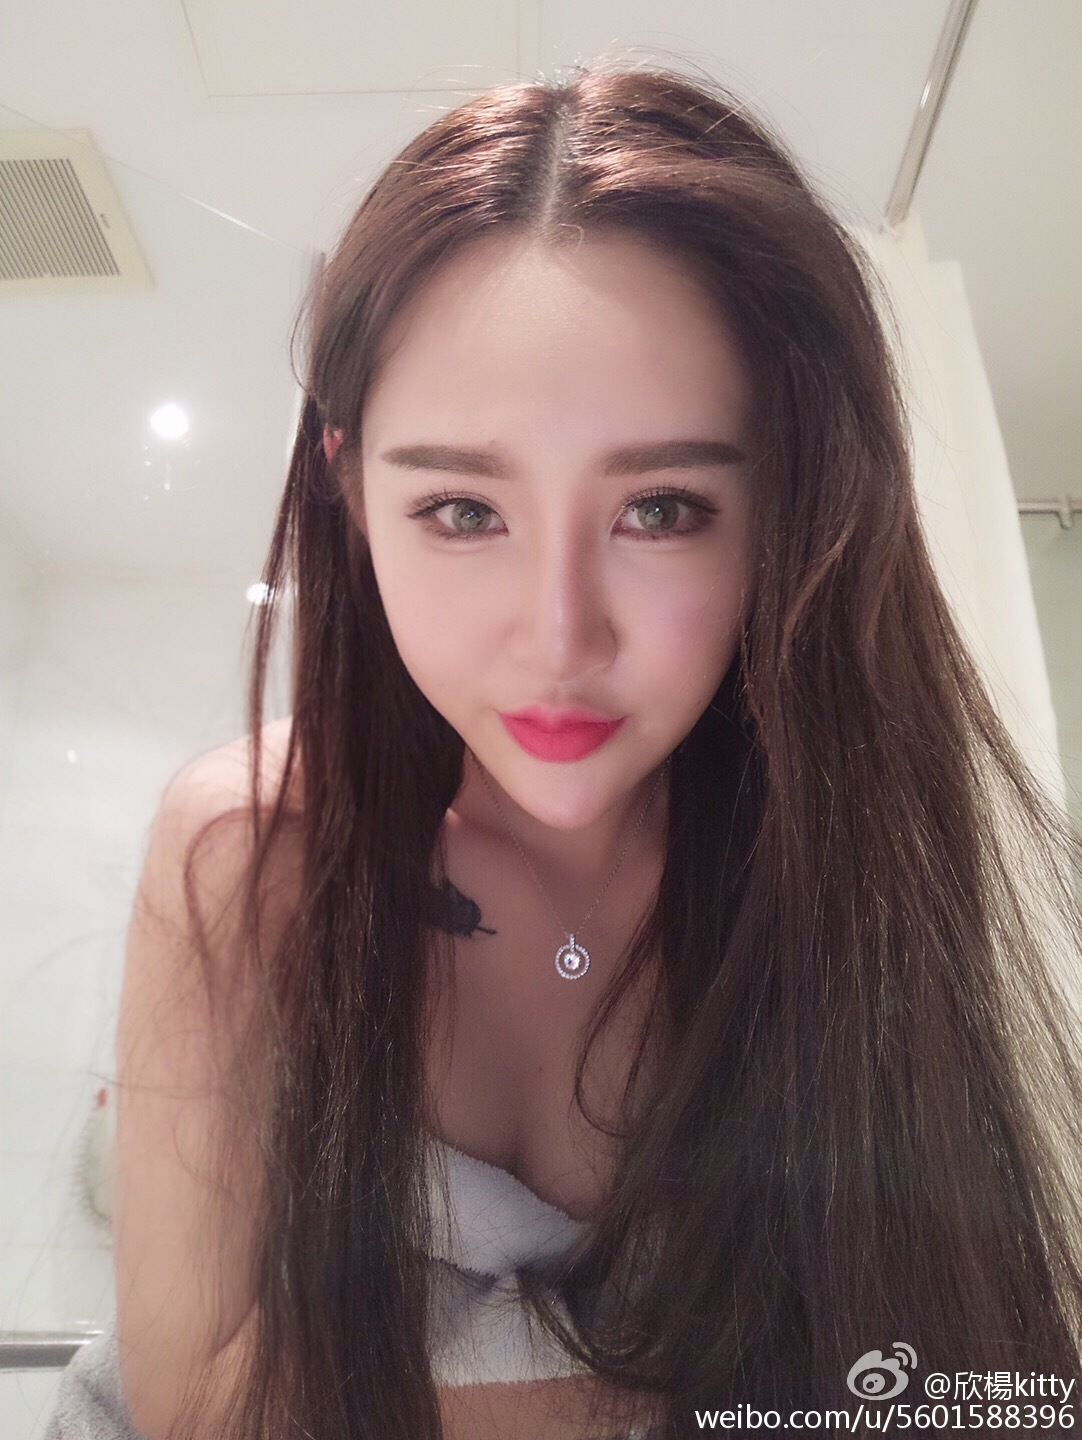 Kiss pop up photo of AISs star model Xin Yang